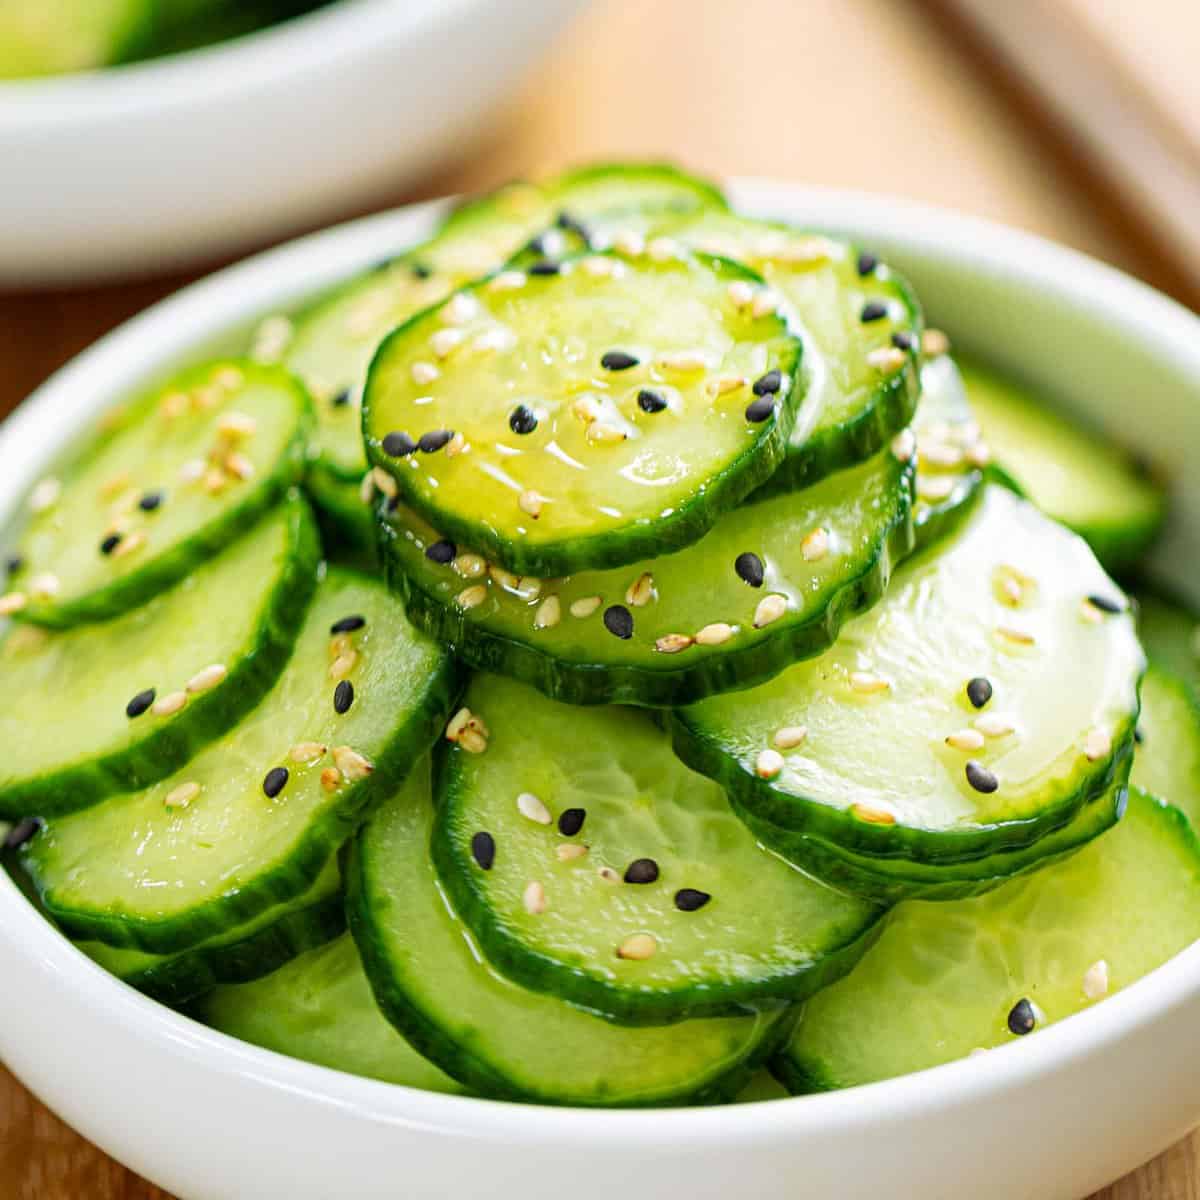 Sunomono or Japanese cucumber salad.